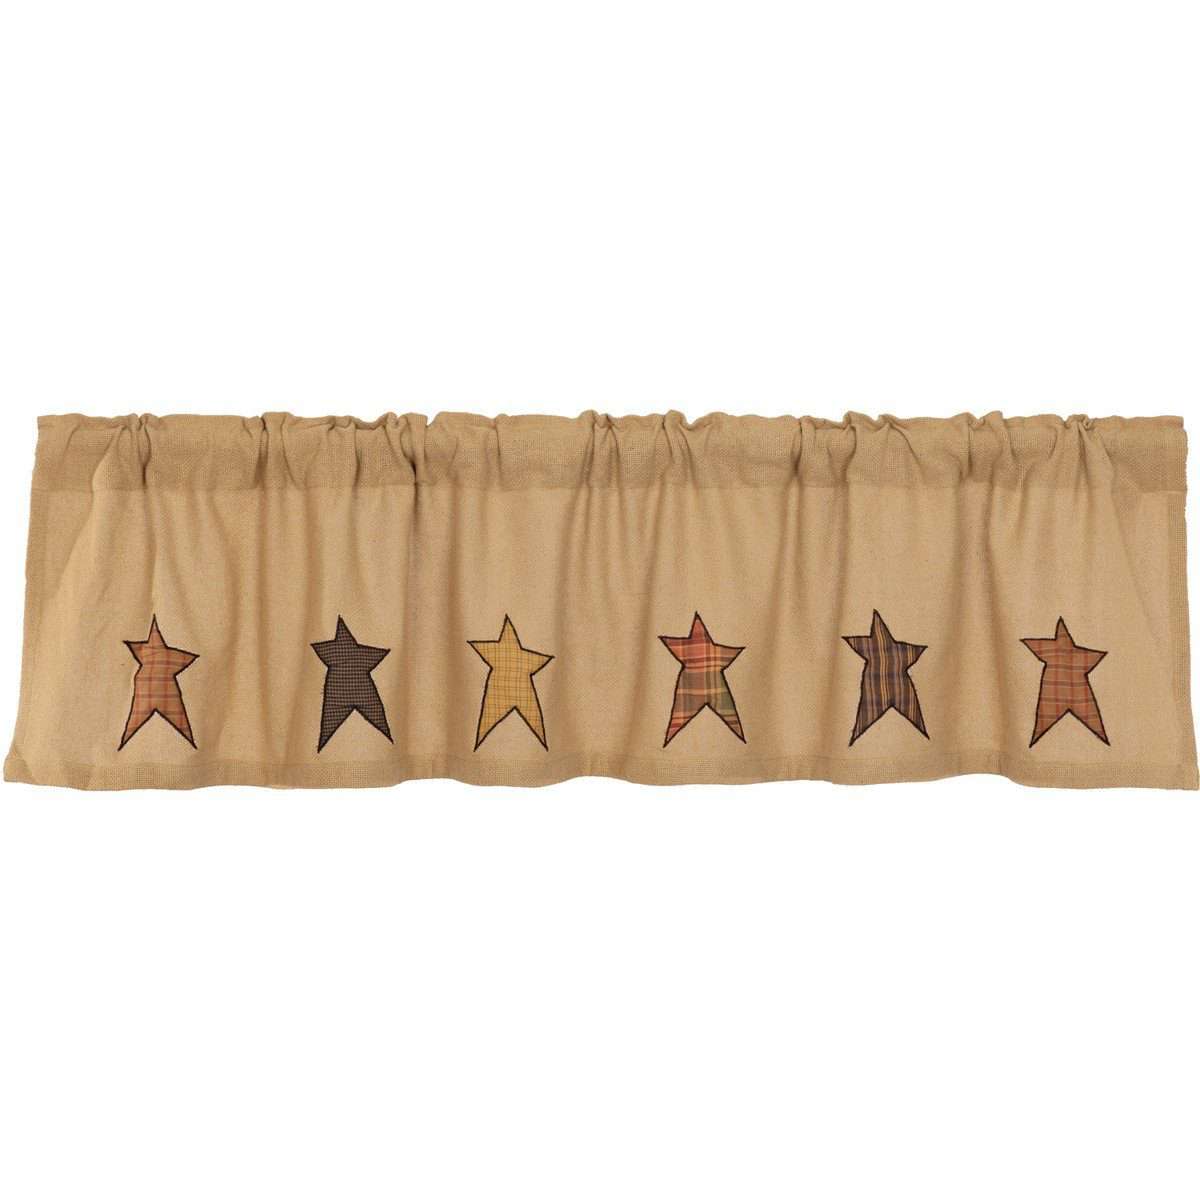 Stratton Burlap Applique Star Valance Curtain - The Fox Decor